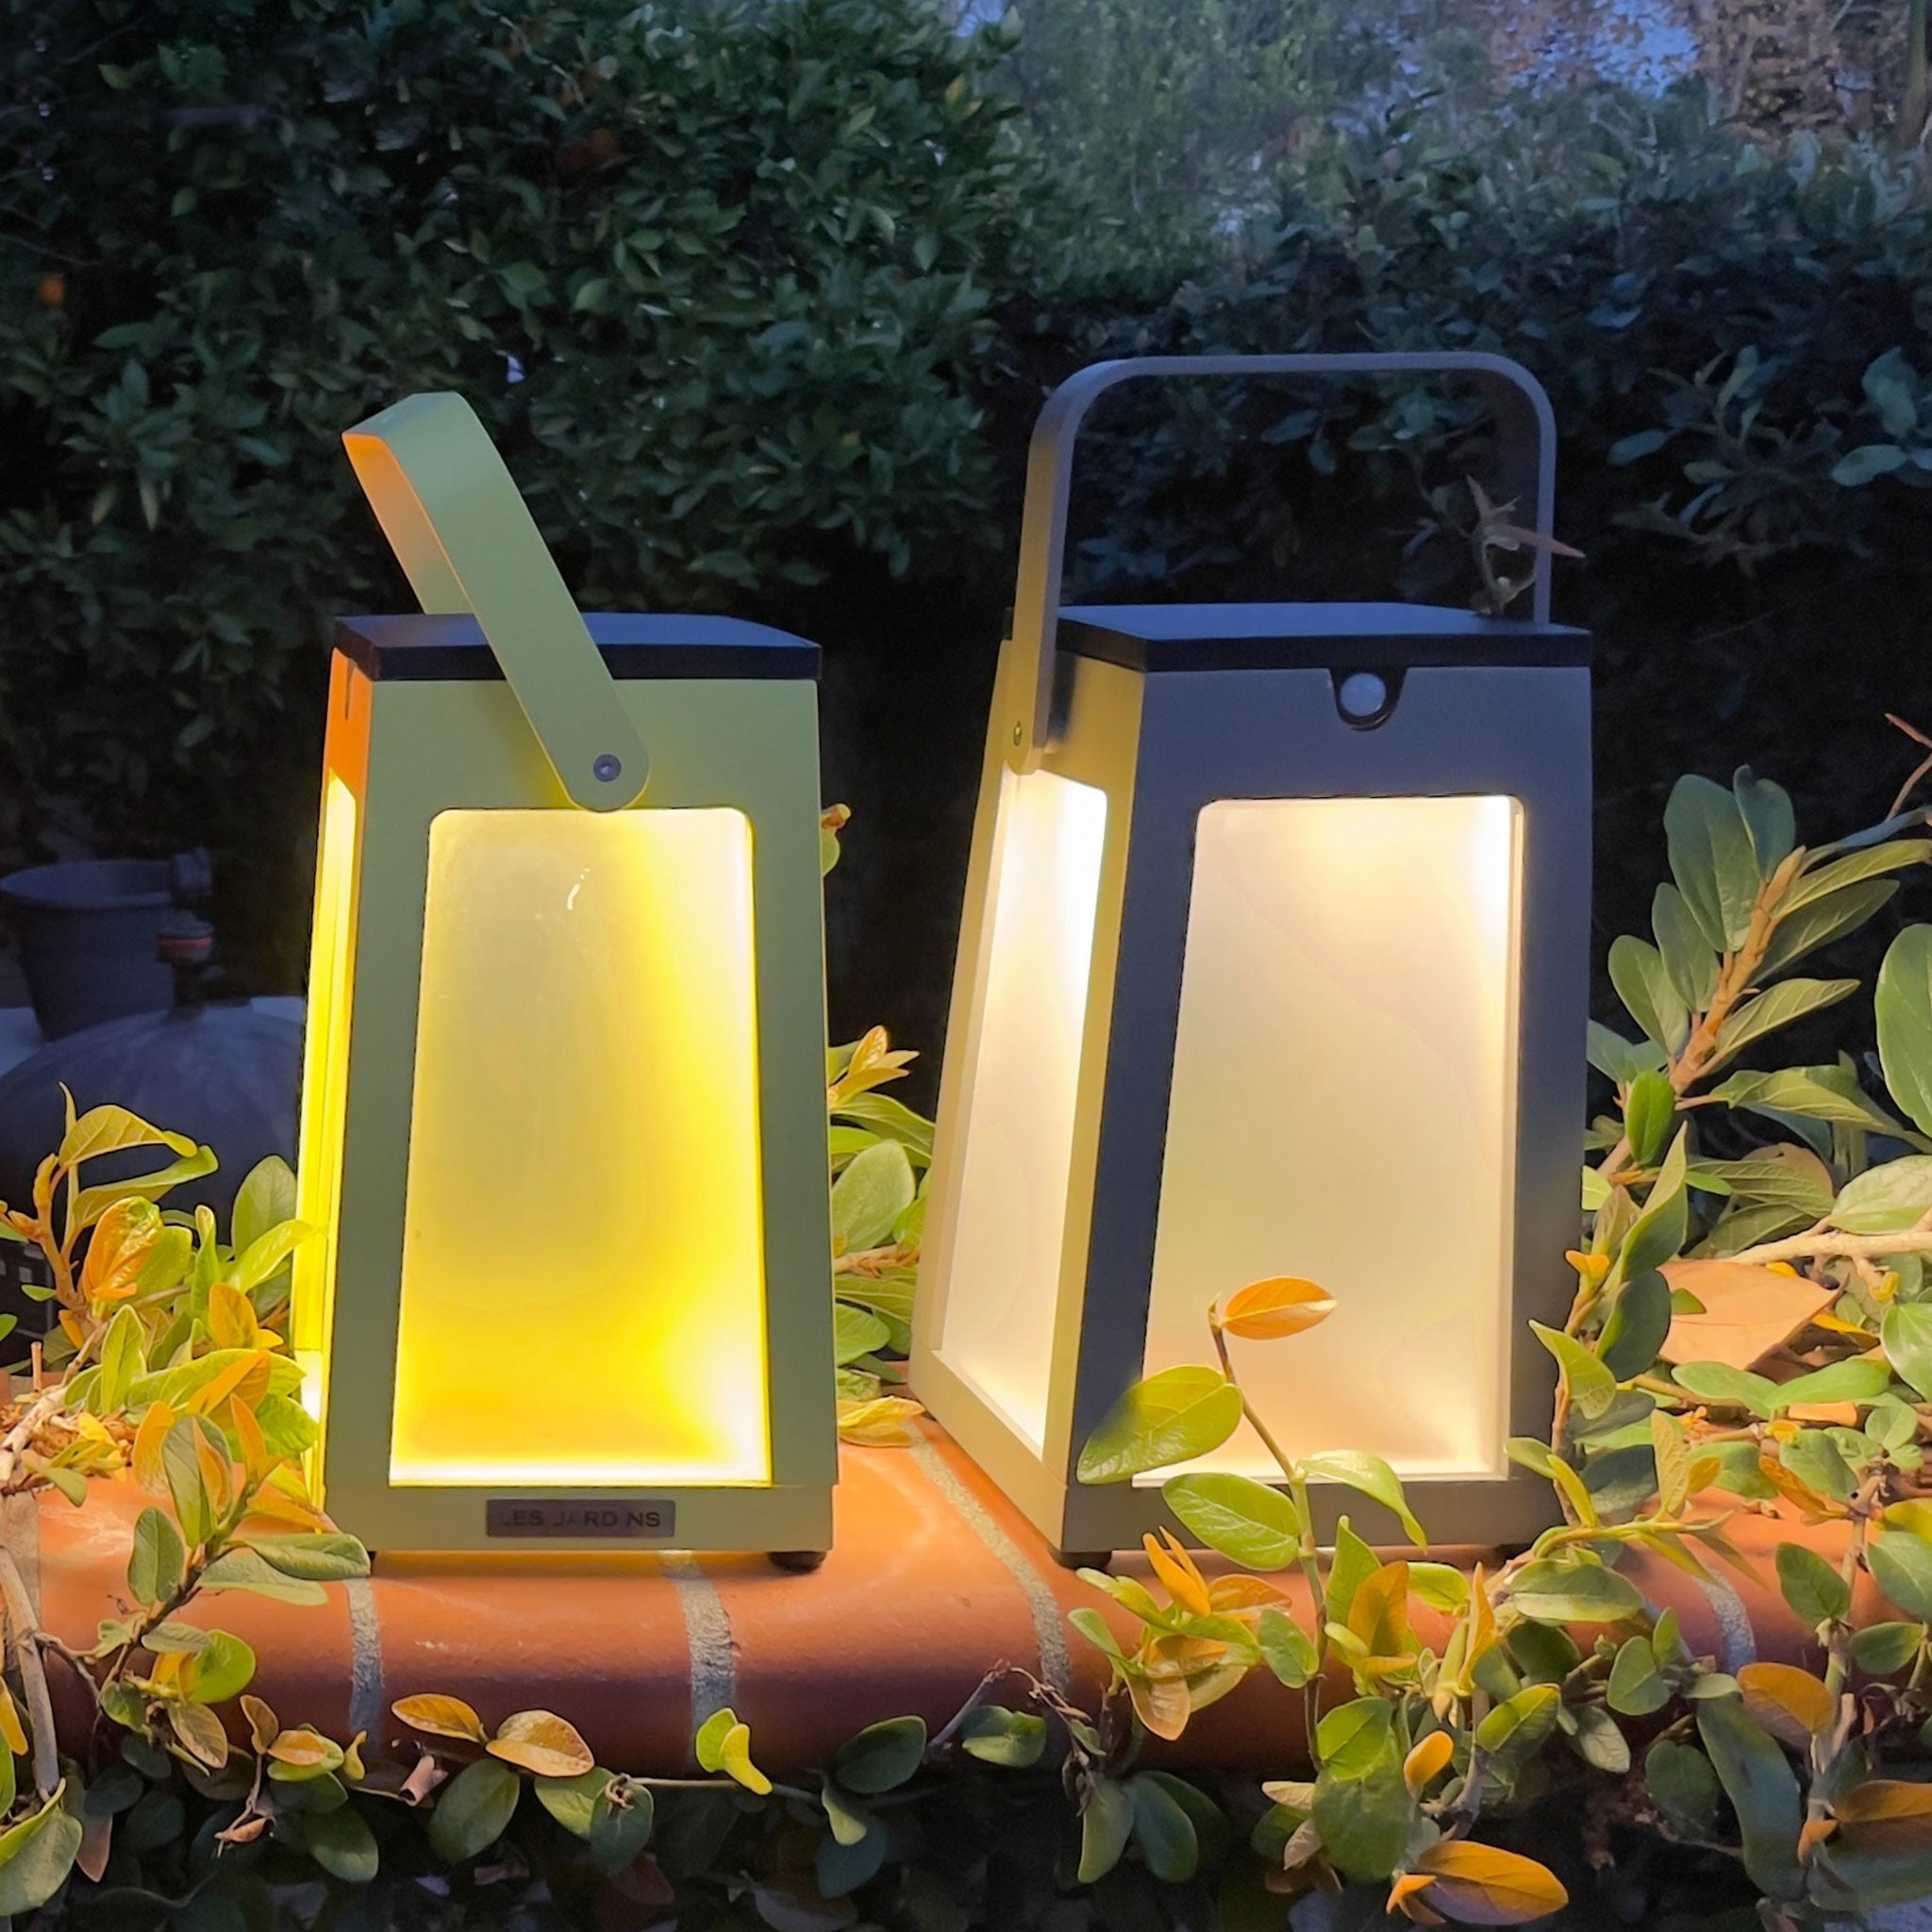 Tinka solar lantern lime and taupe finish light up garden